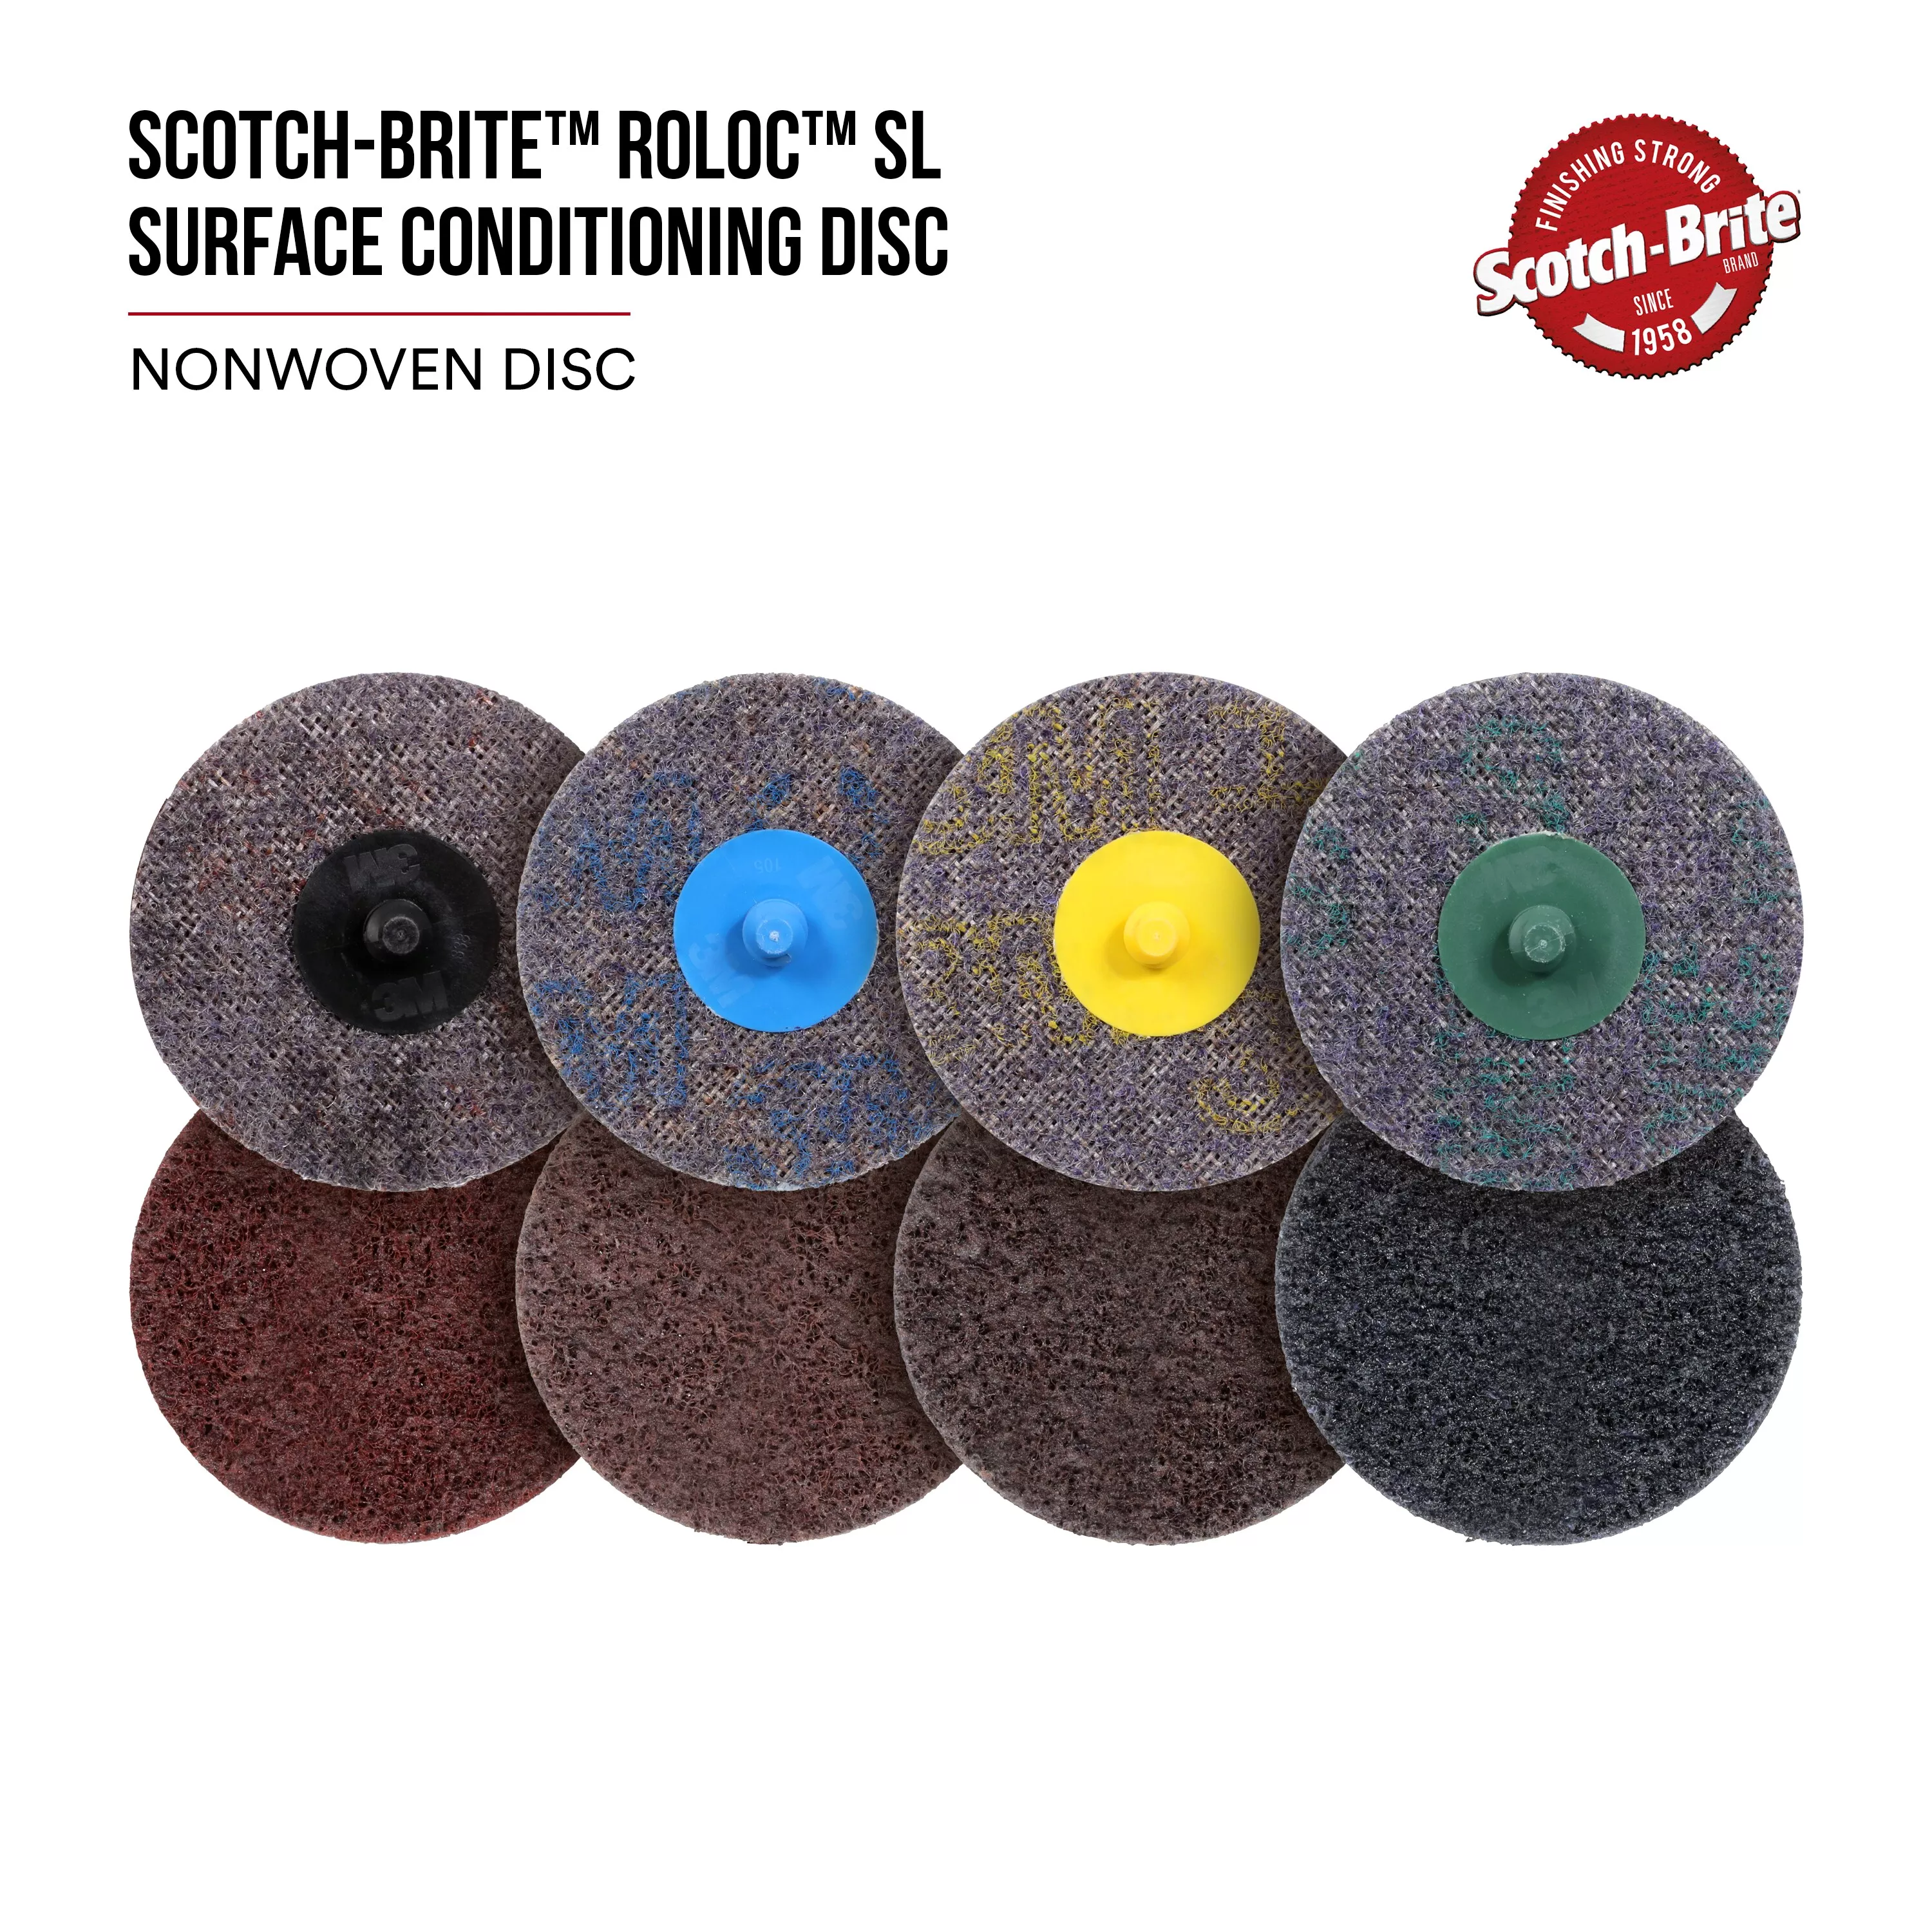 SKU 7000121082 | Scotch-Brite™ Roloc™ SL Surface Conditioning Disc